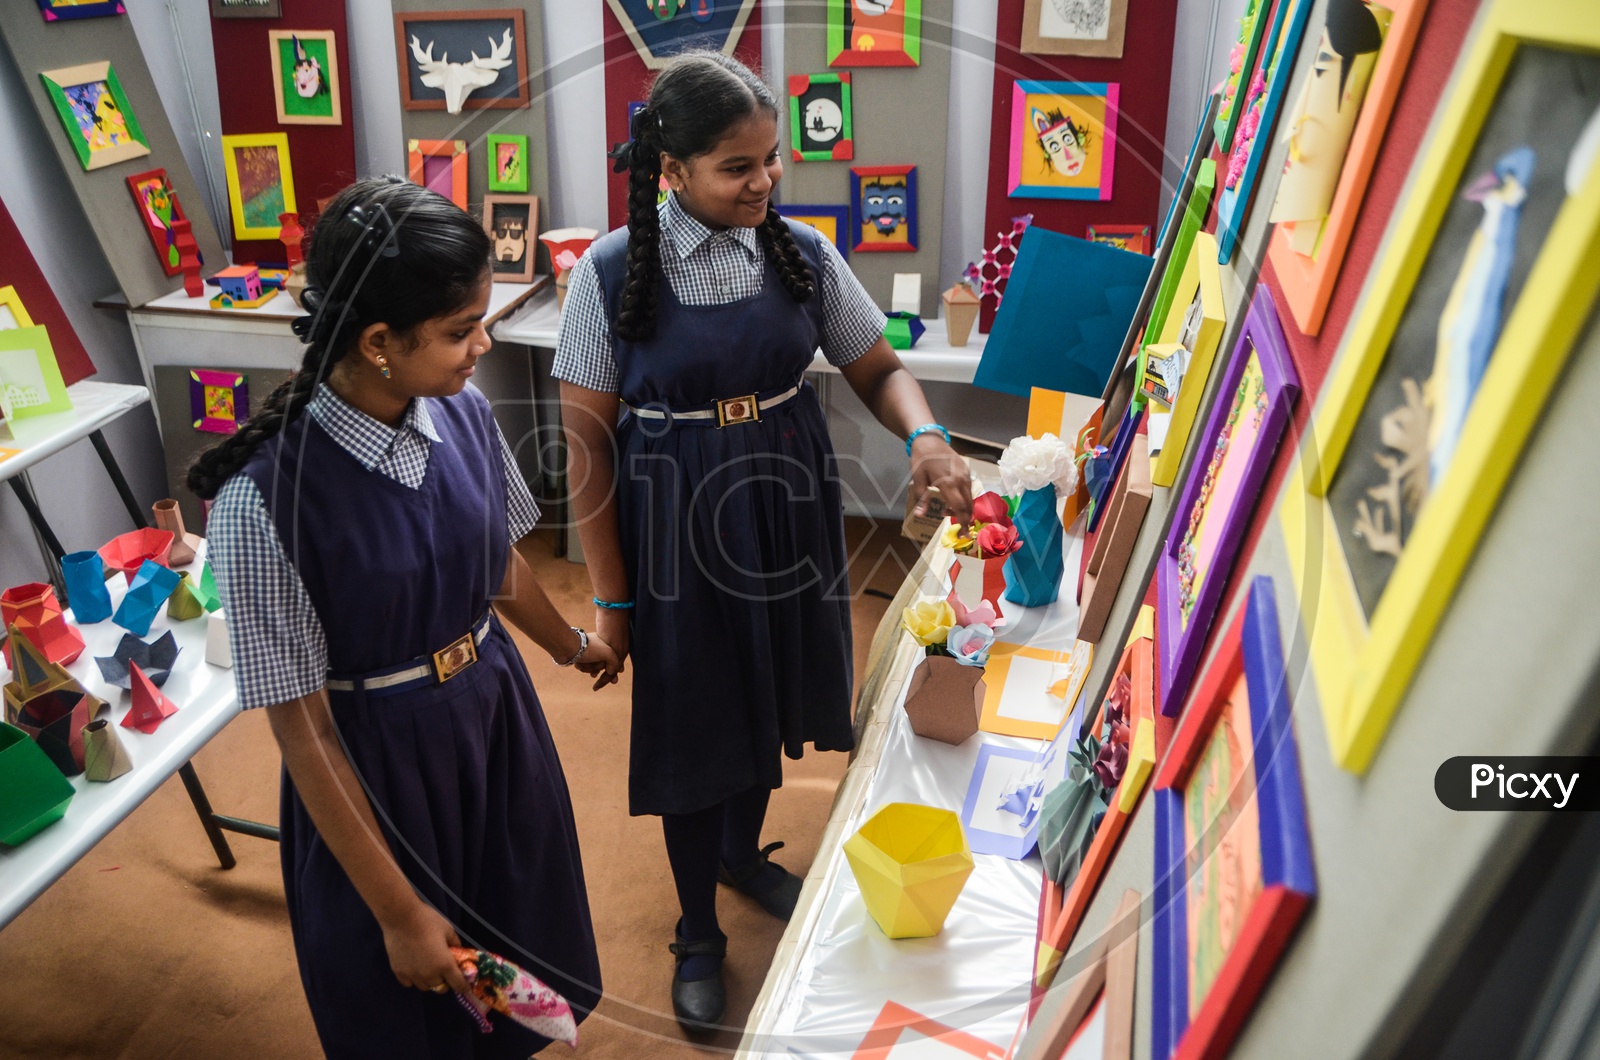 School children, Science fair